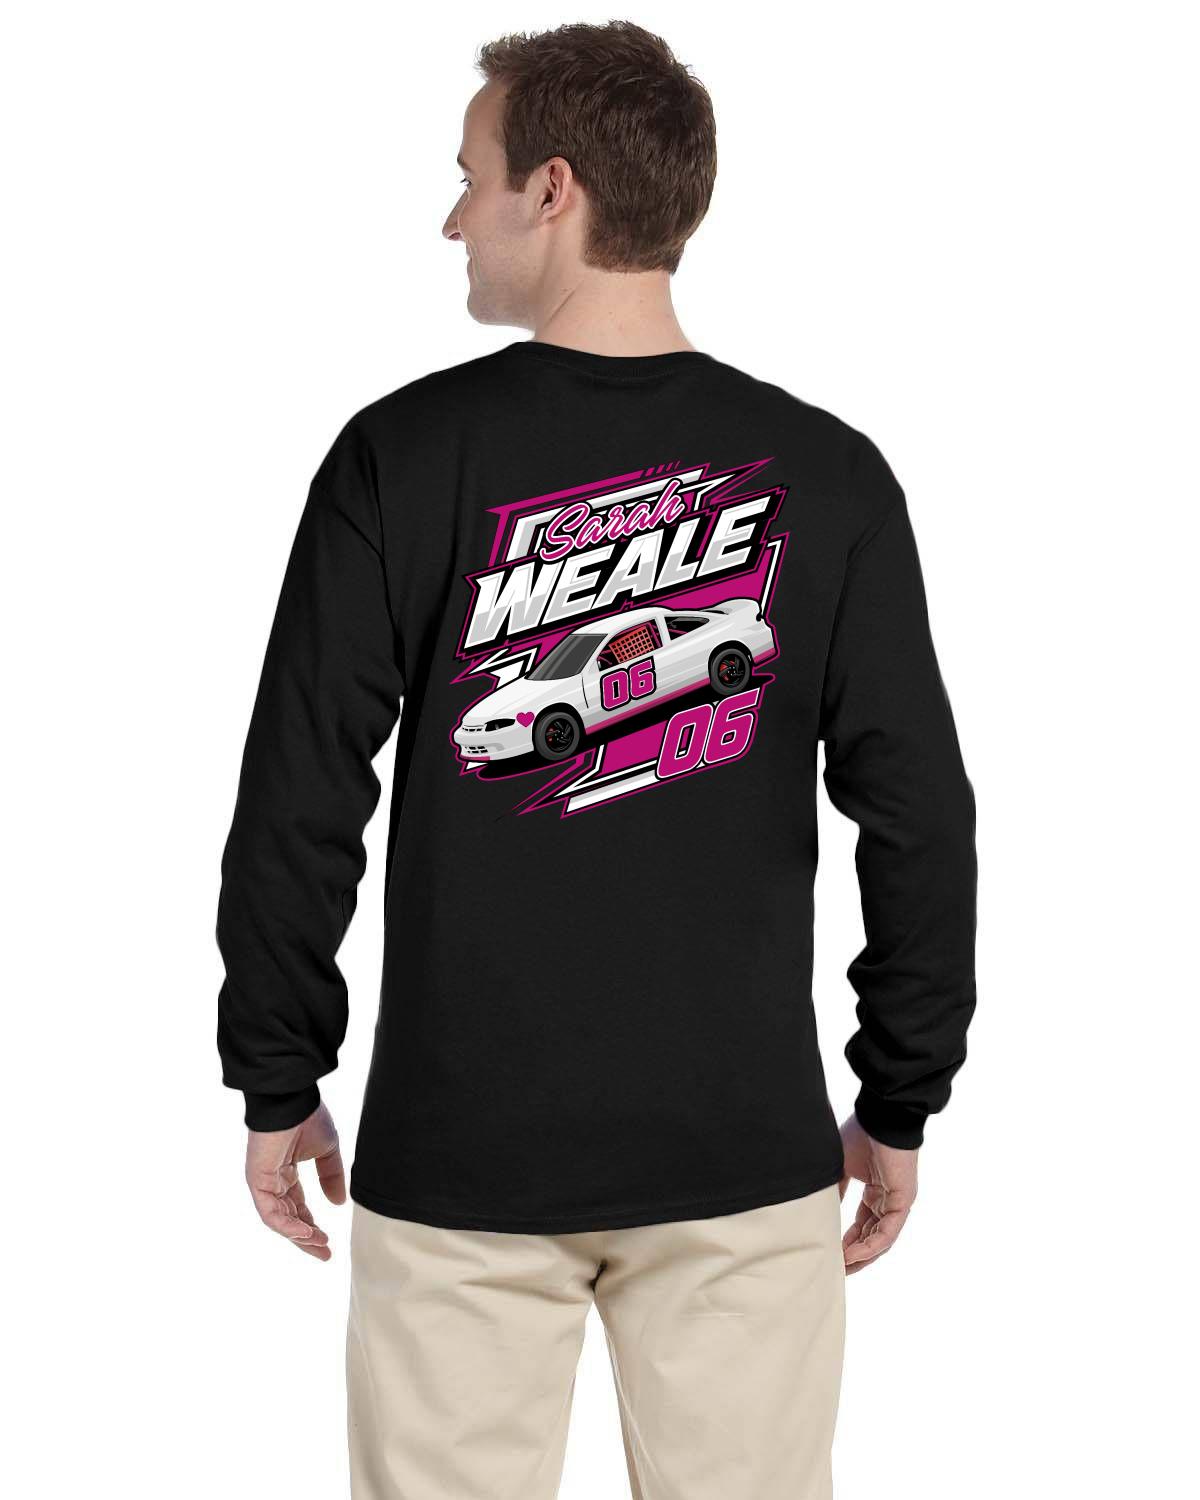 Sarah Weale Racing Adult Long-Sleeve T-Shirt